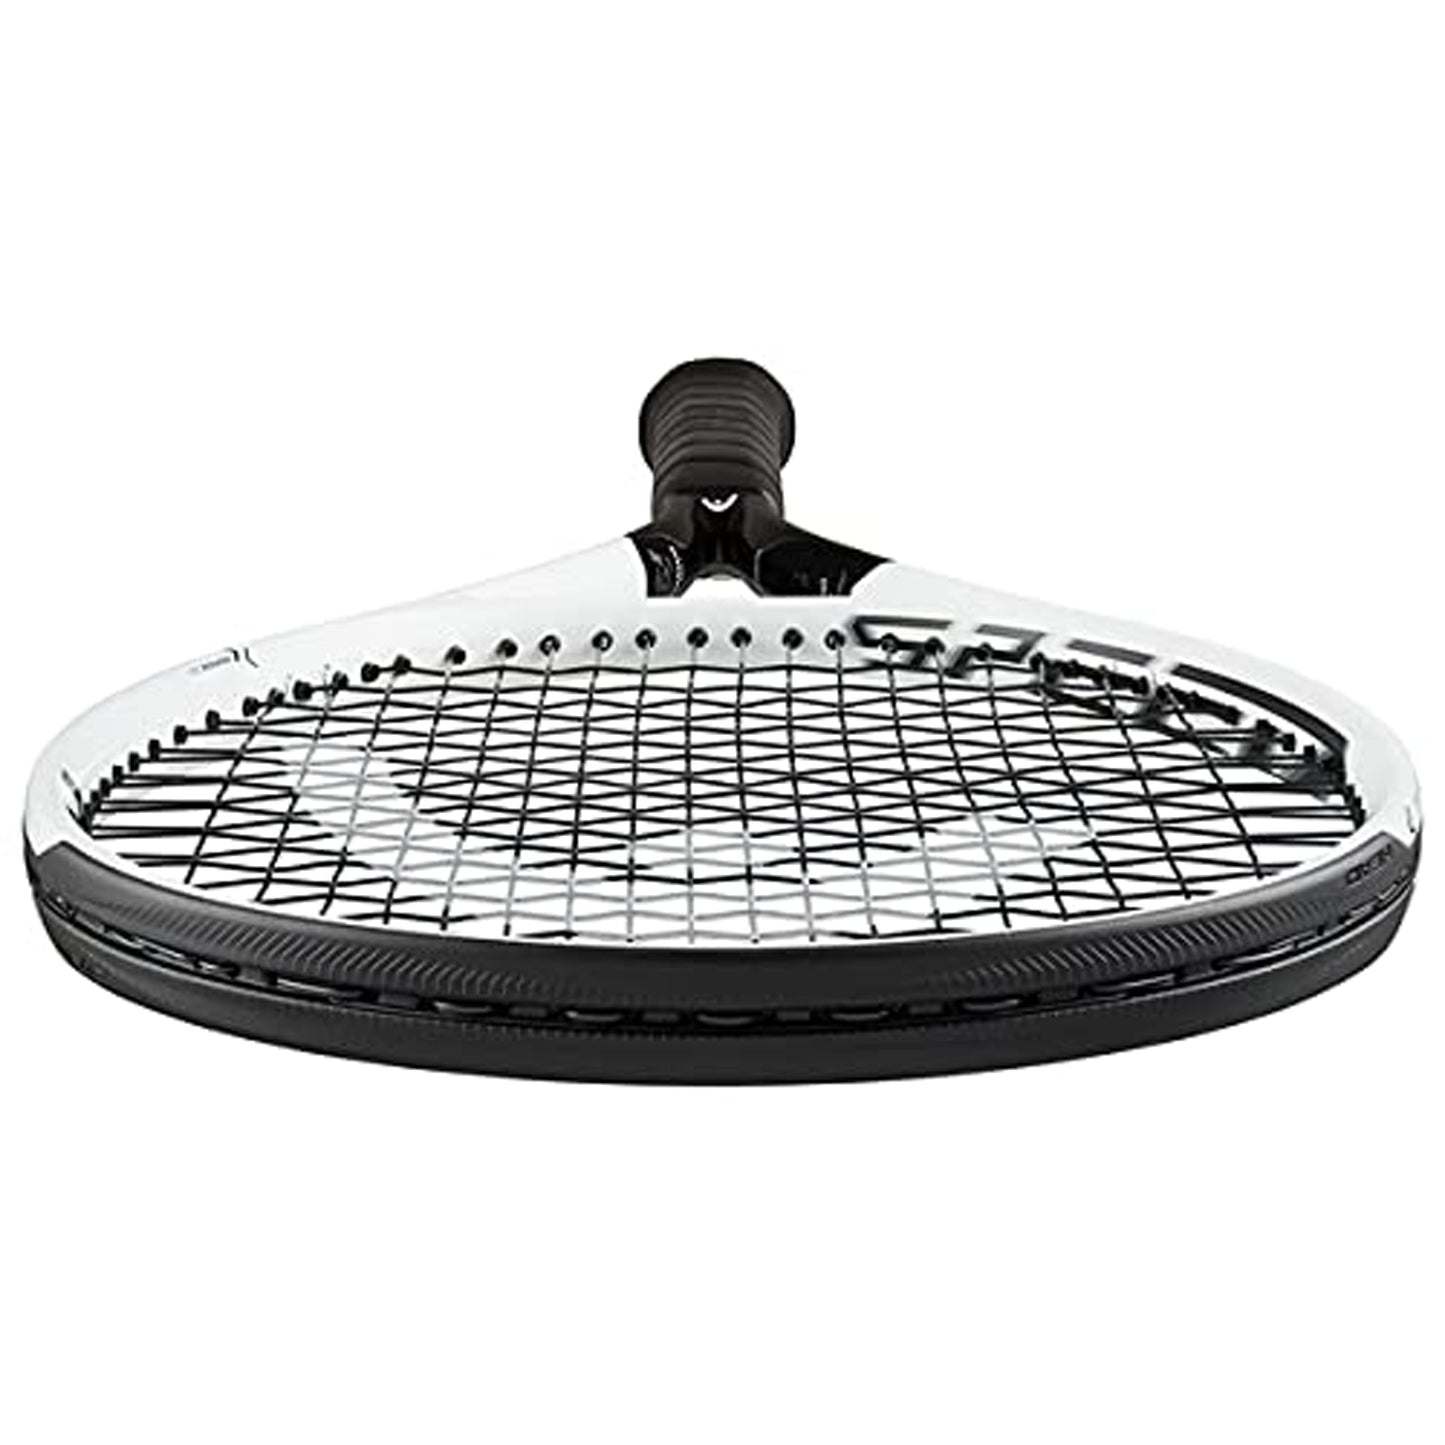 HEAD Graphene 360+ Speed PRO Tennis Racquet, White/Black - Best Price online Prokicksports.com